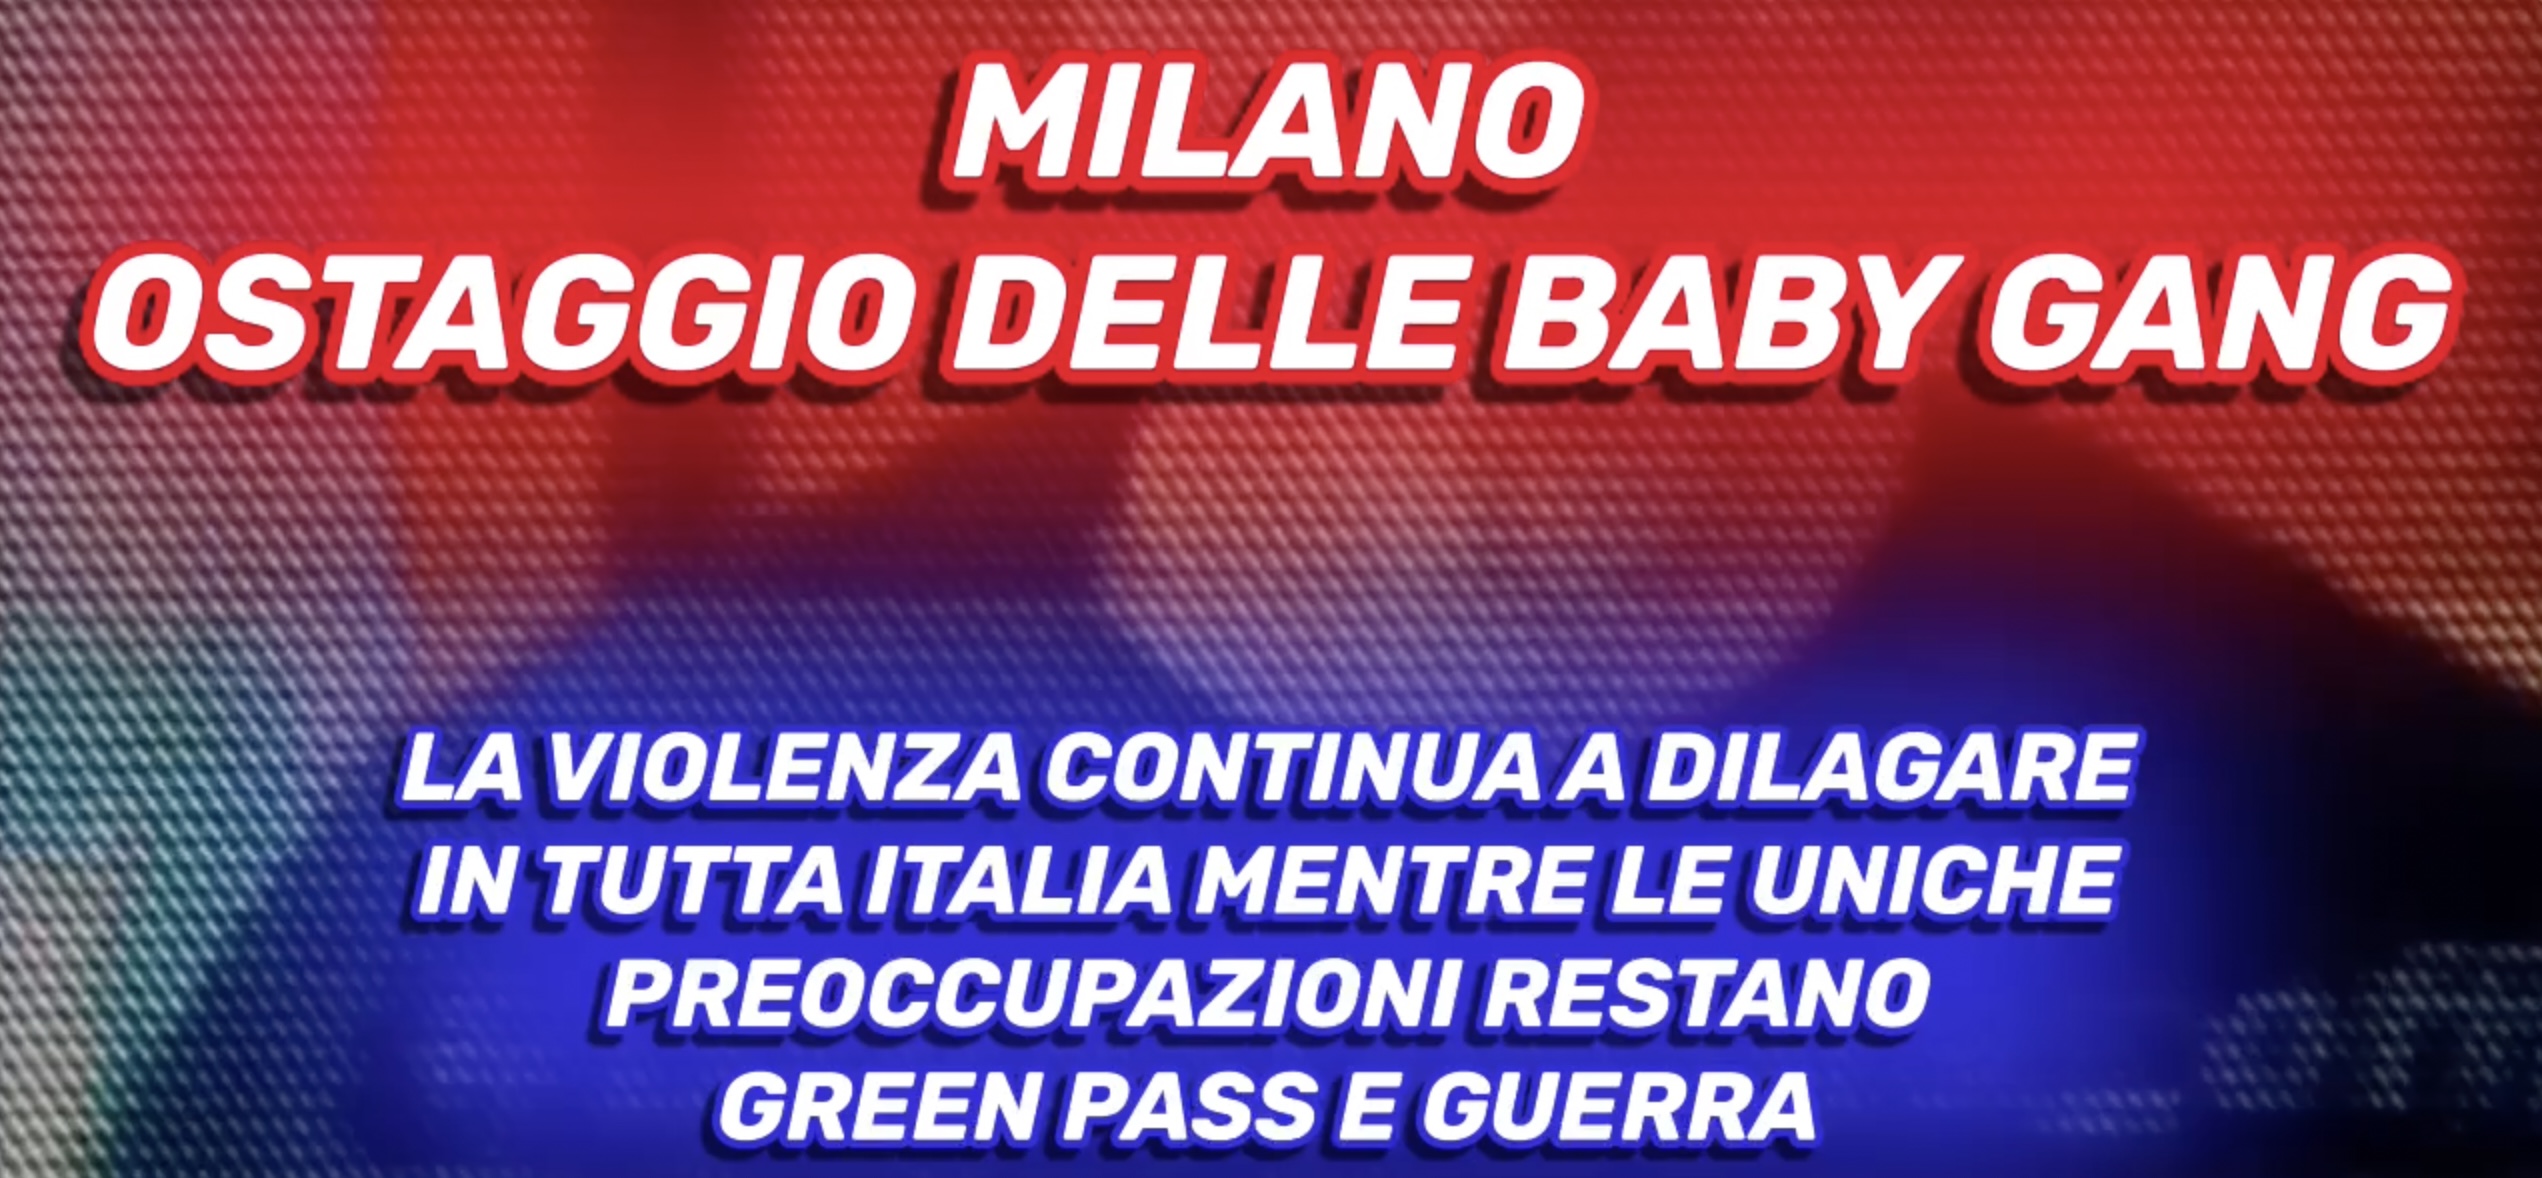 Milano Ostaggio delle Baby Gang